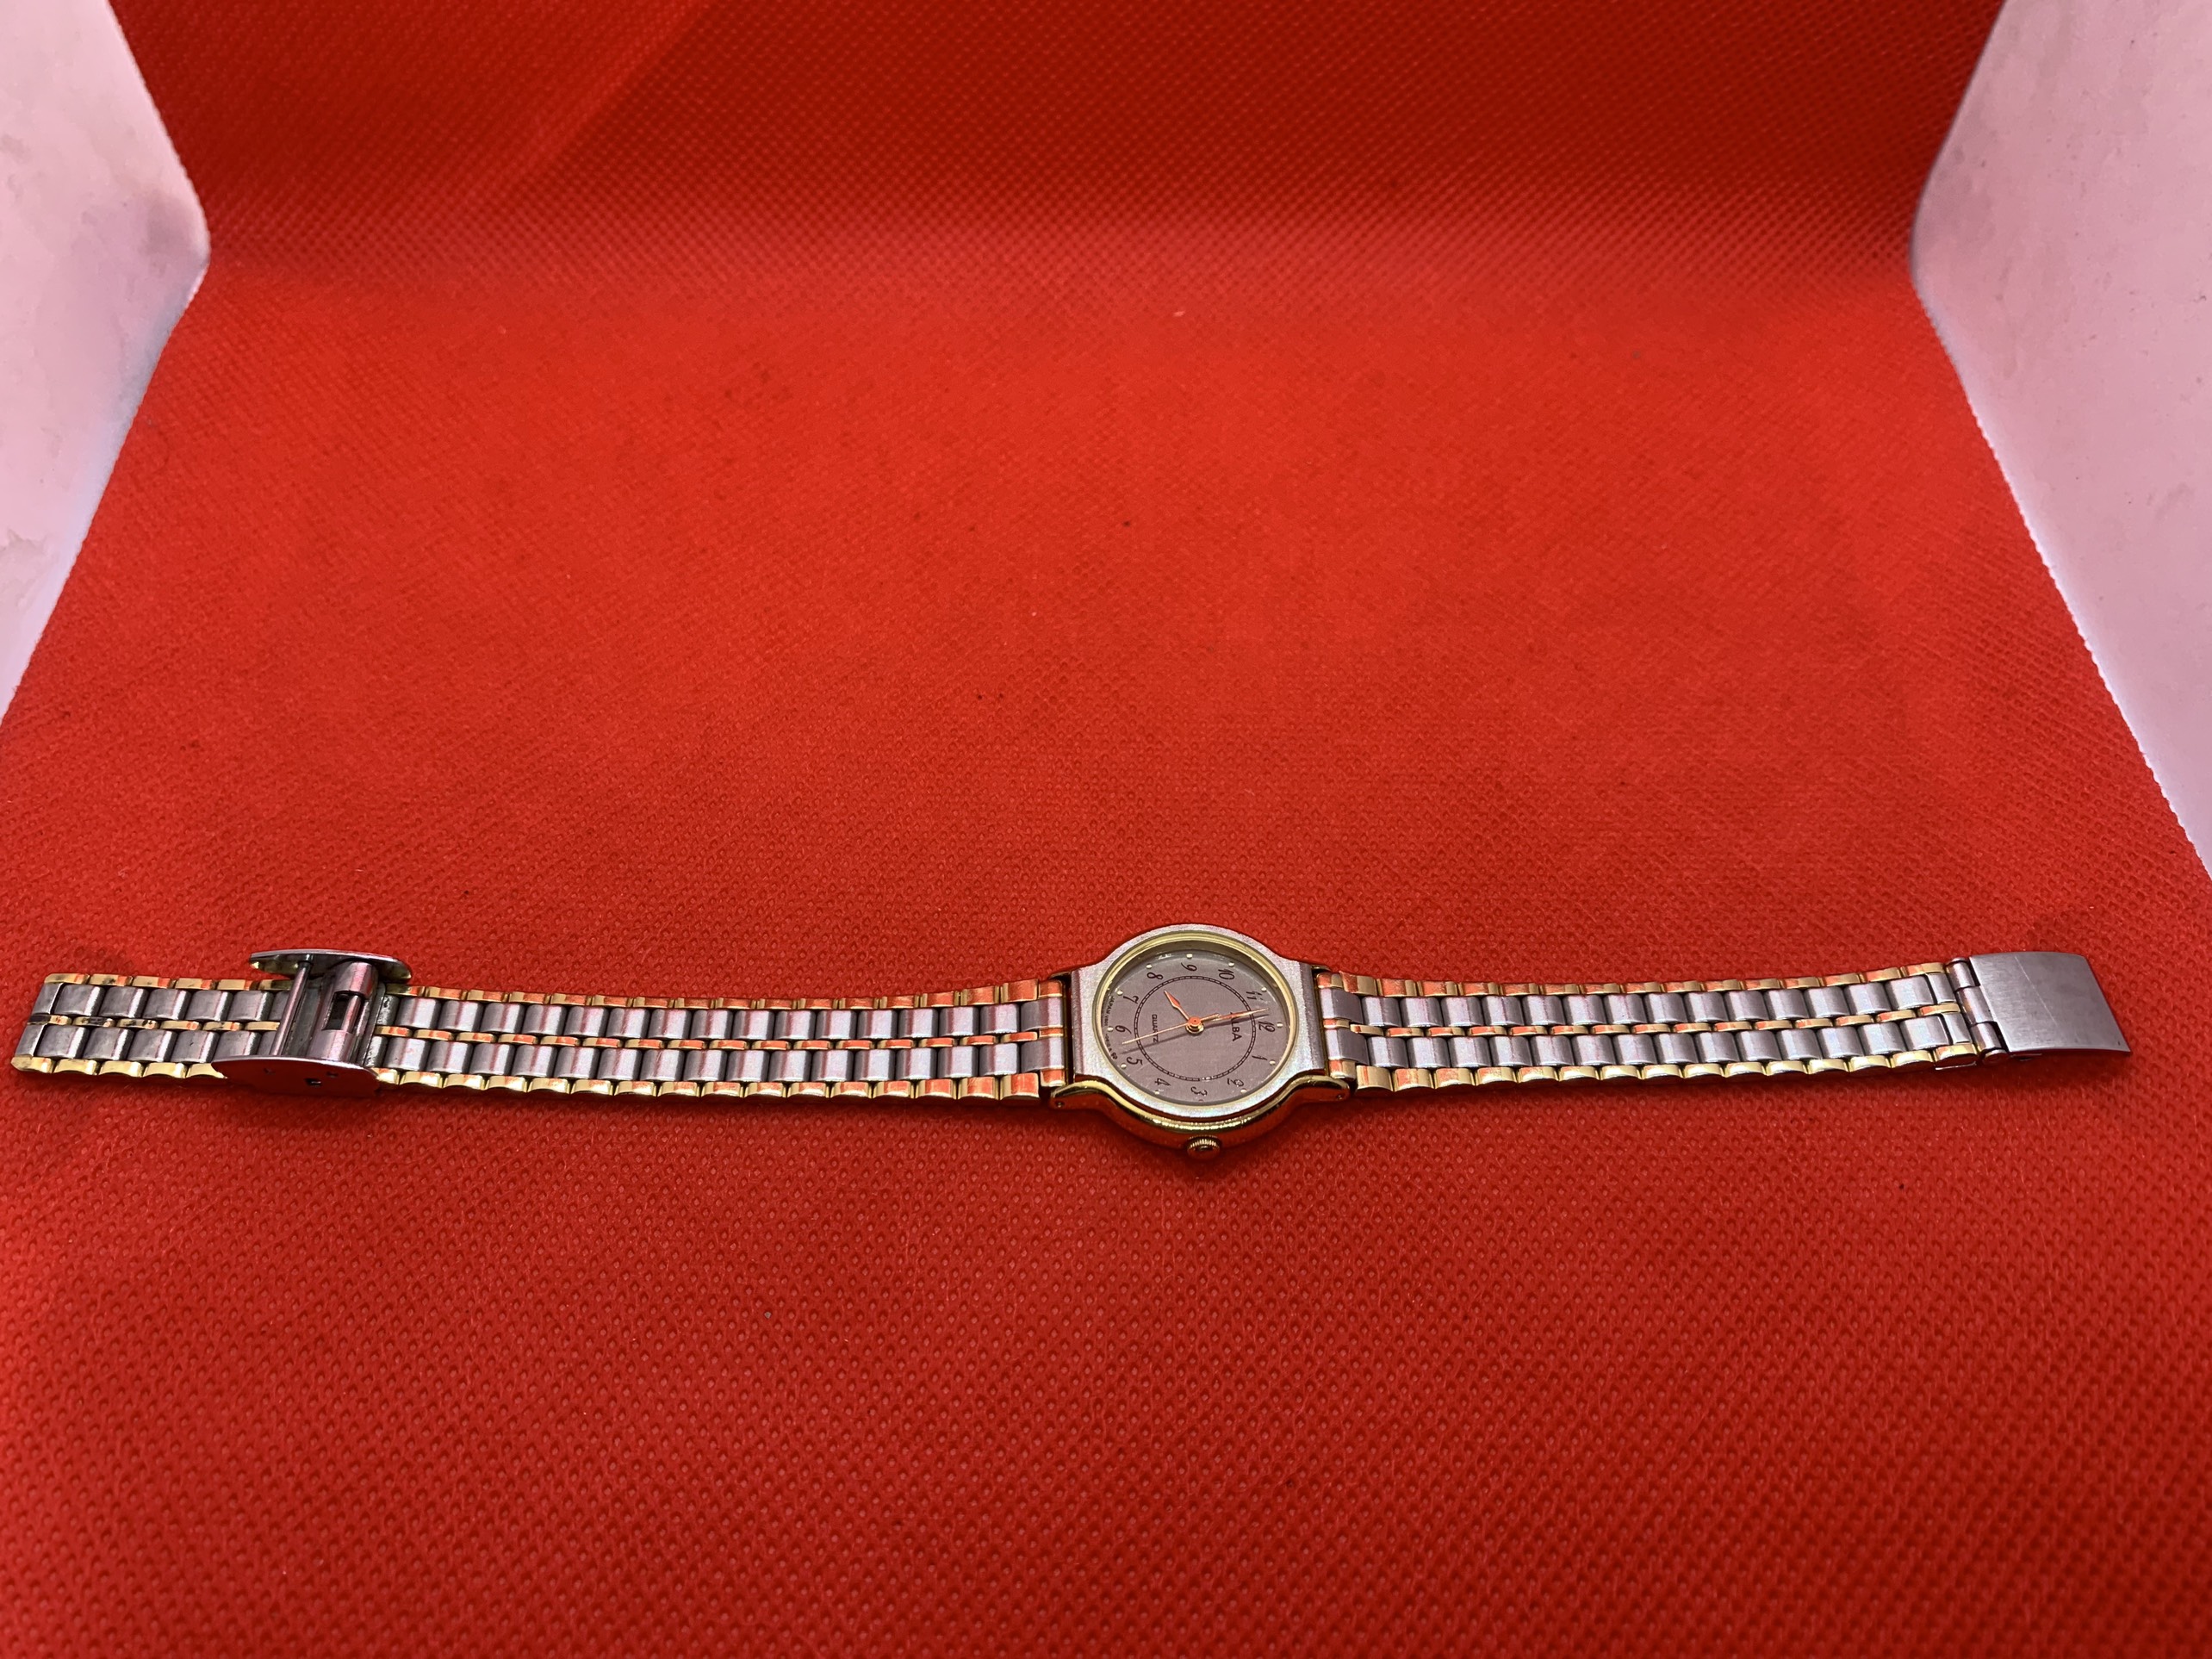 Đồng hồ nữ hiệu Alba size 25